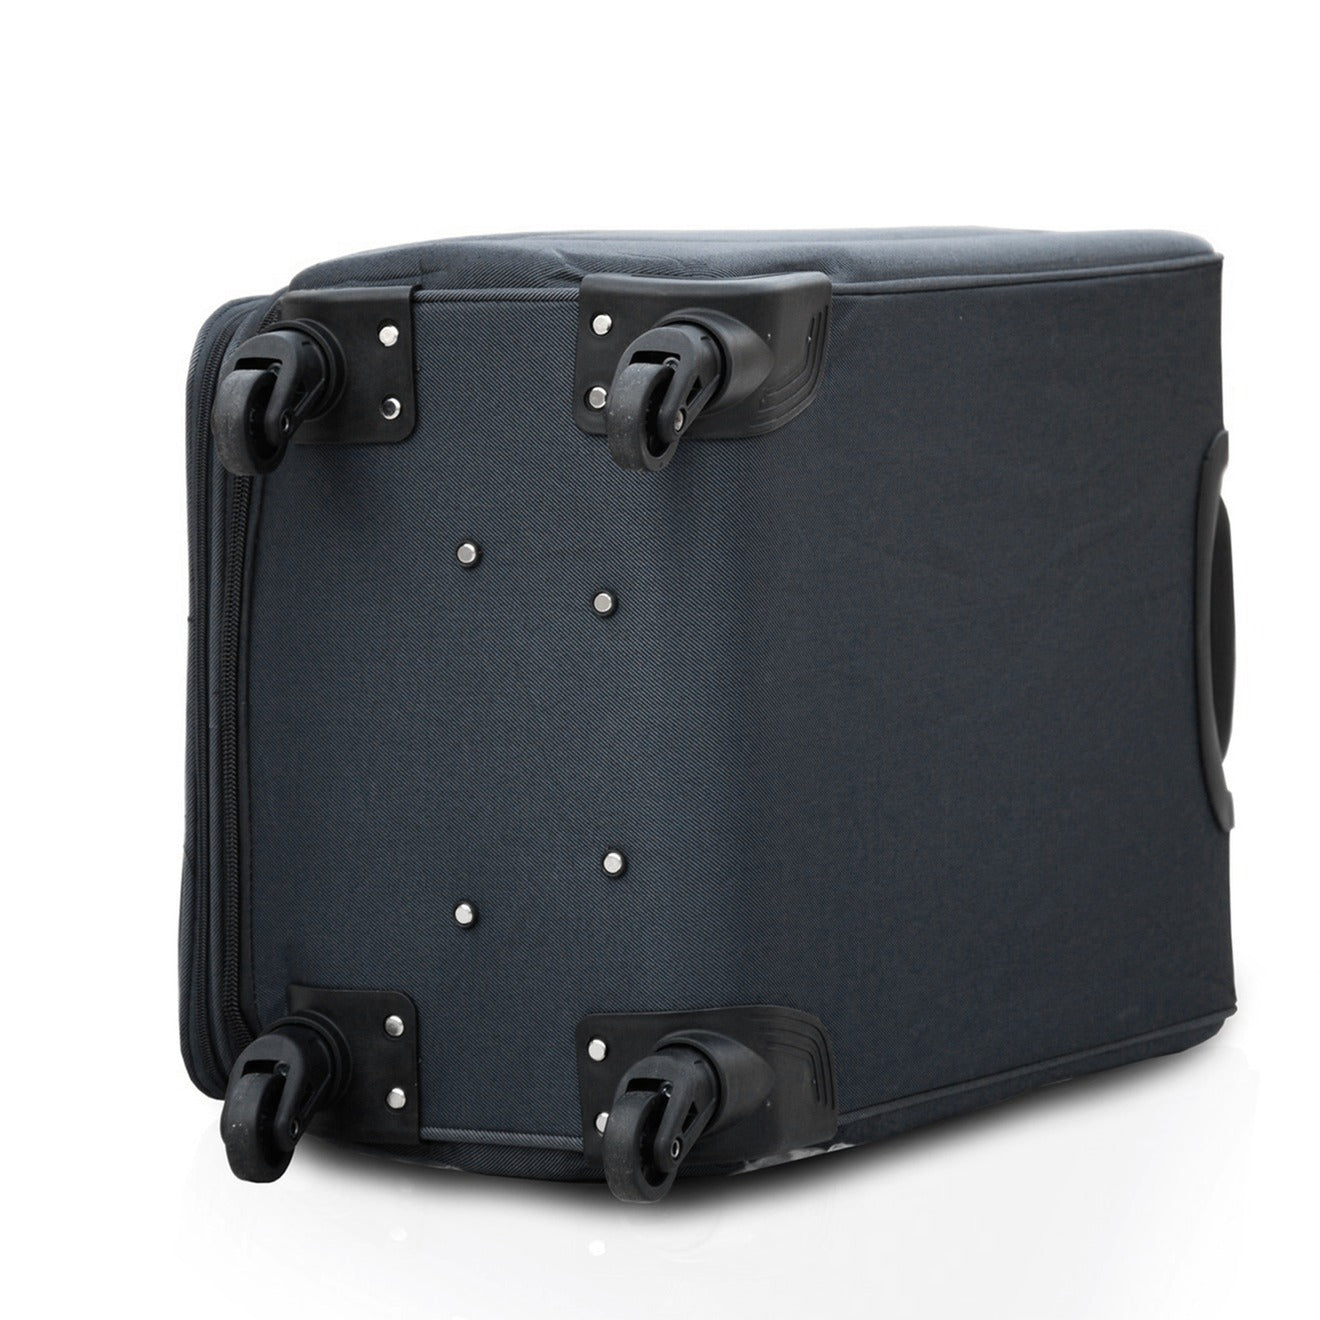 20" Black Colour SJ JIAN 4 Wheel Luggage Lightweight Soft Material Carry On Trolley Bag